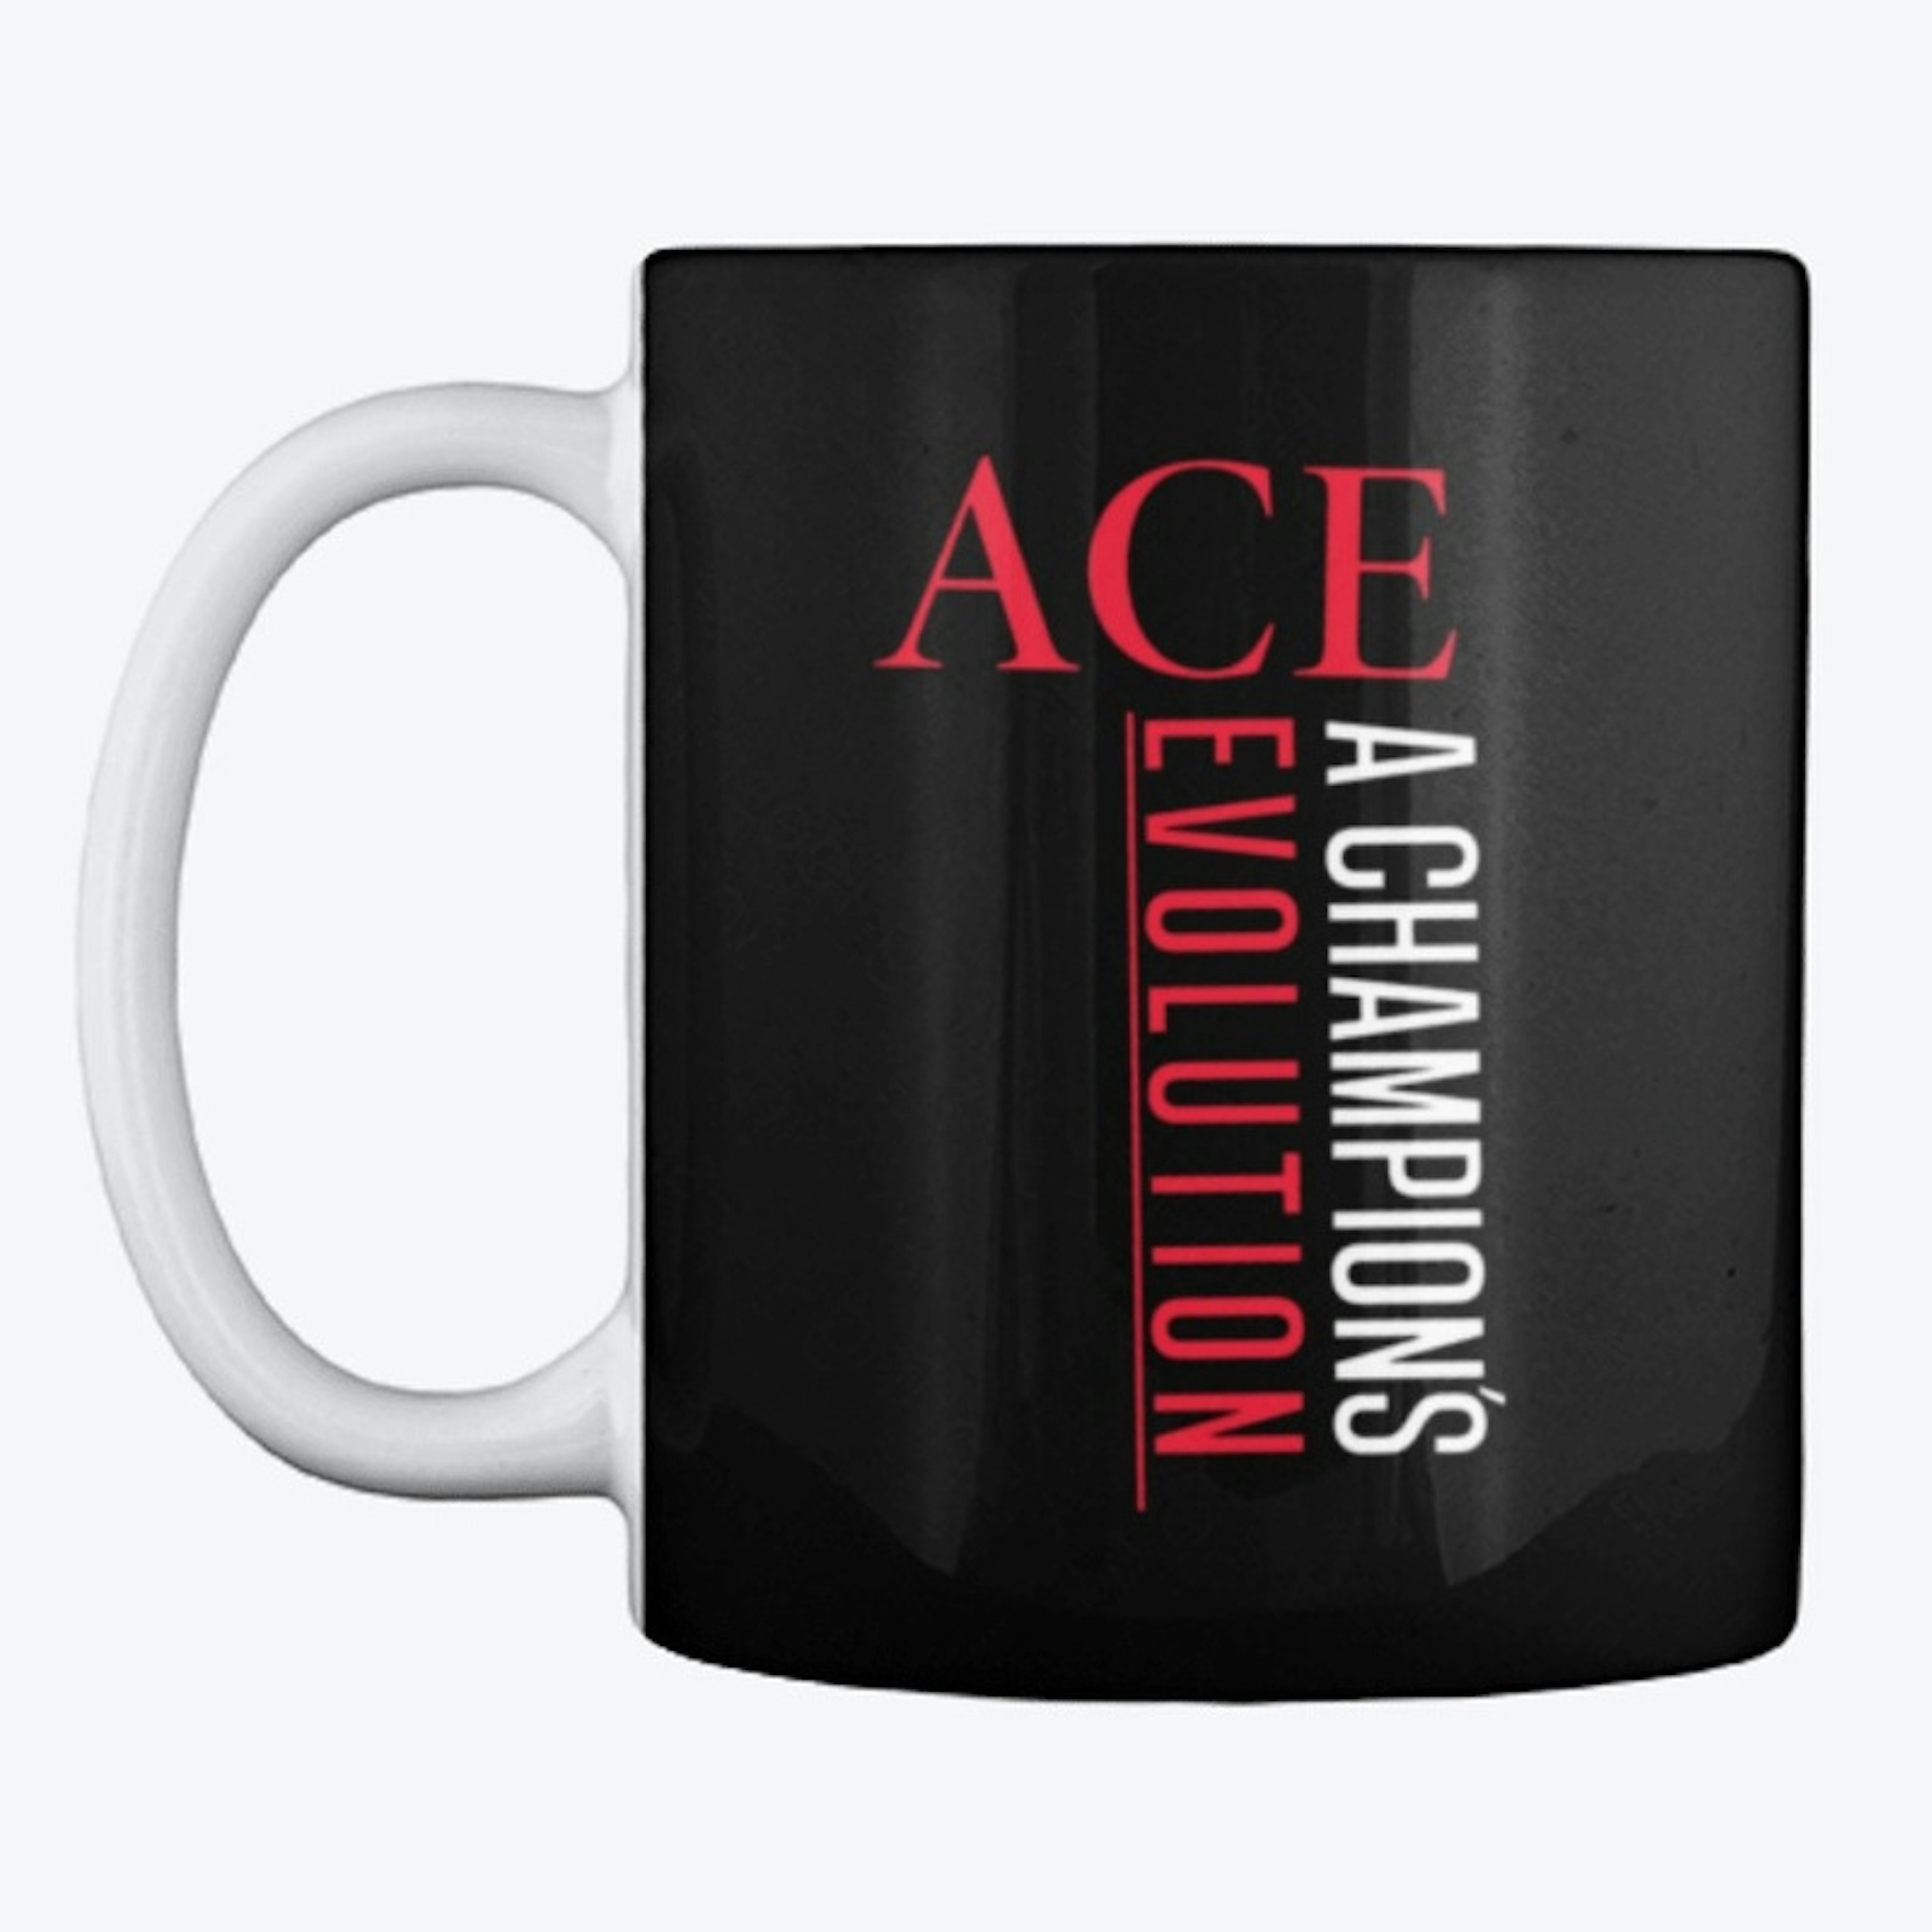 Ace- A Champion's Evolution